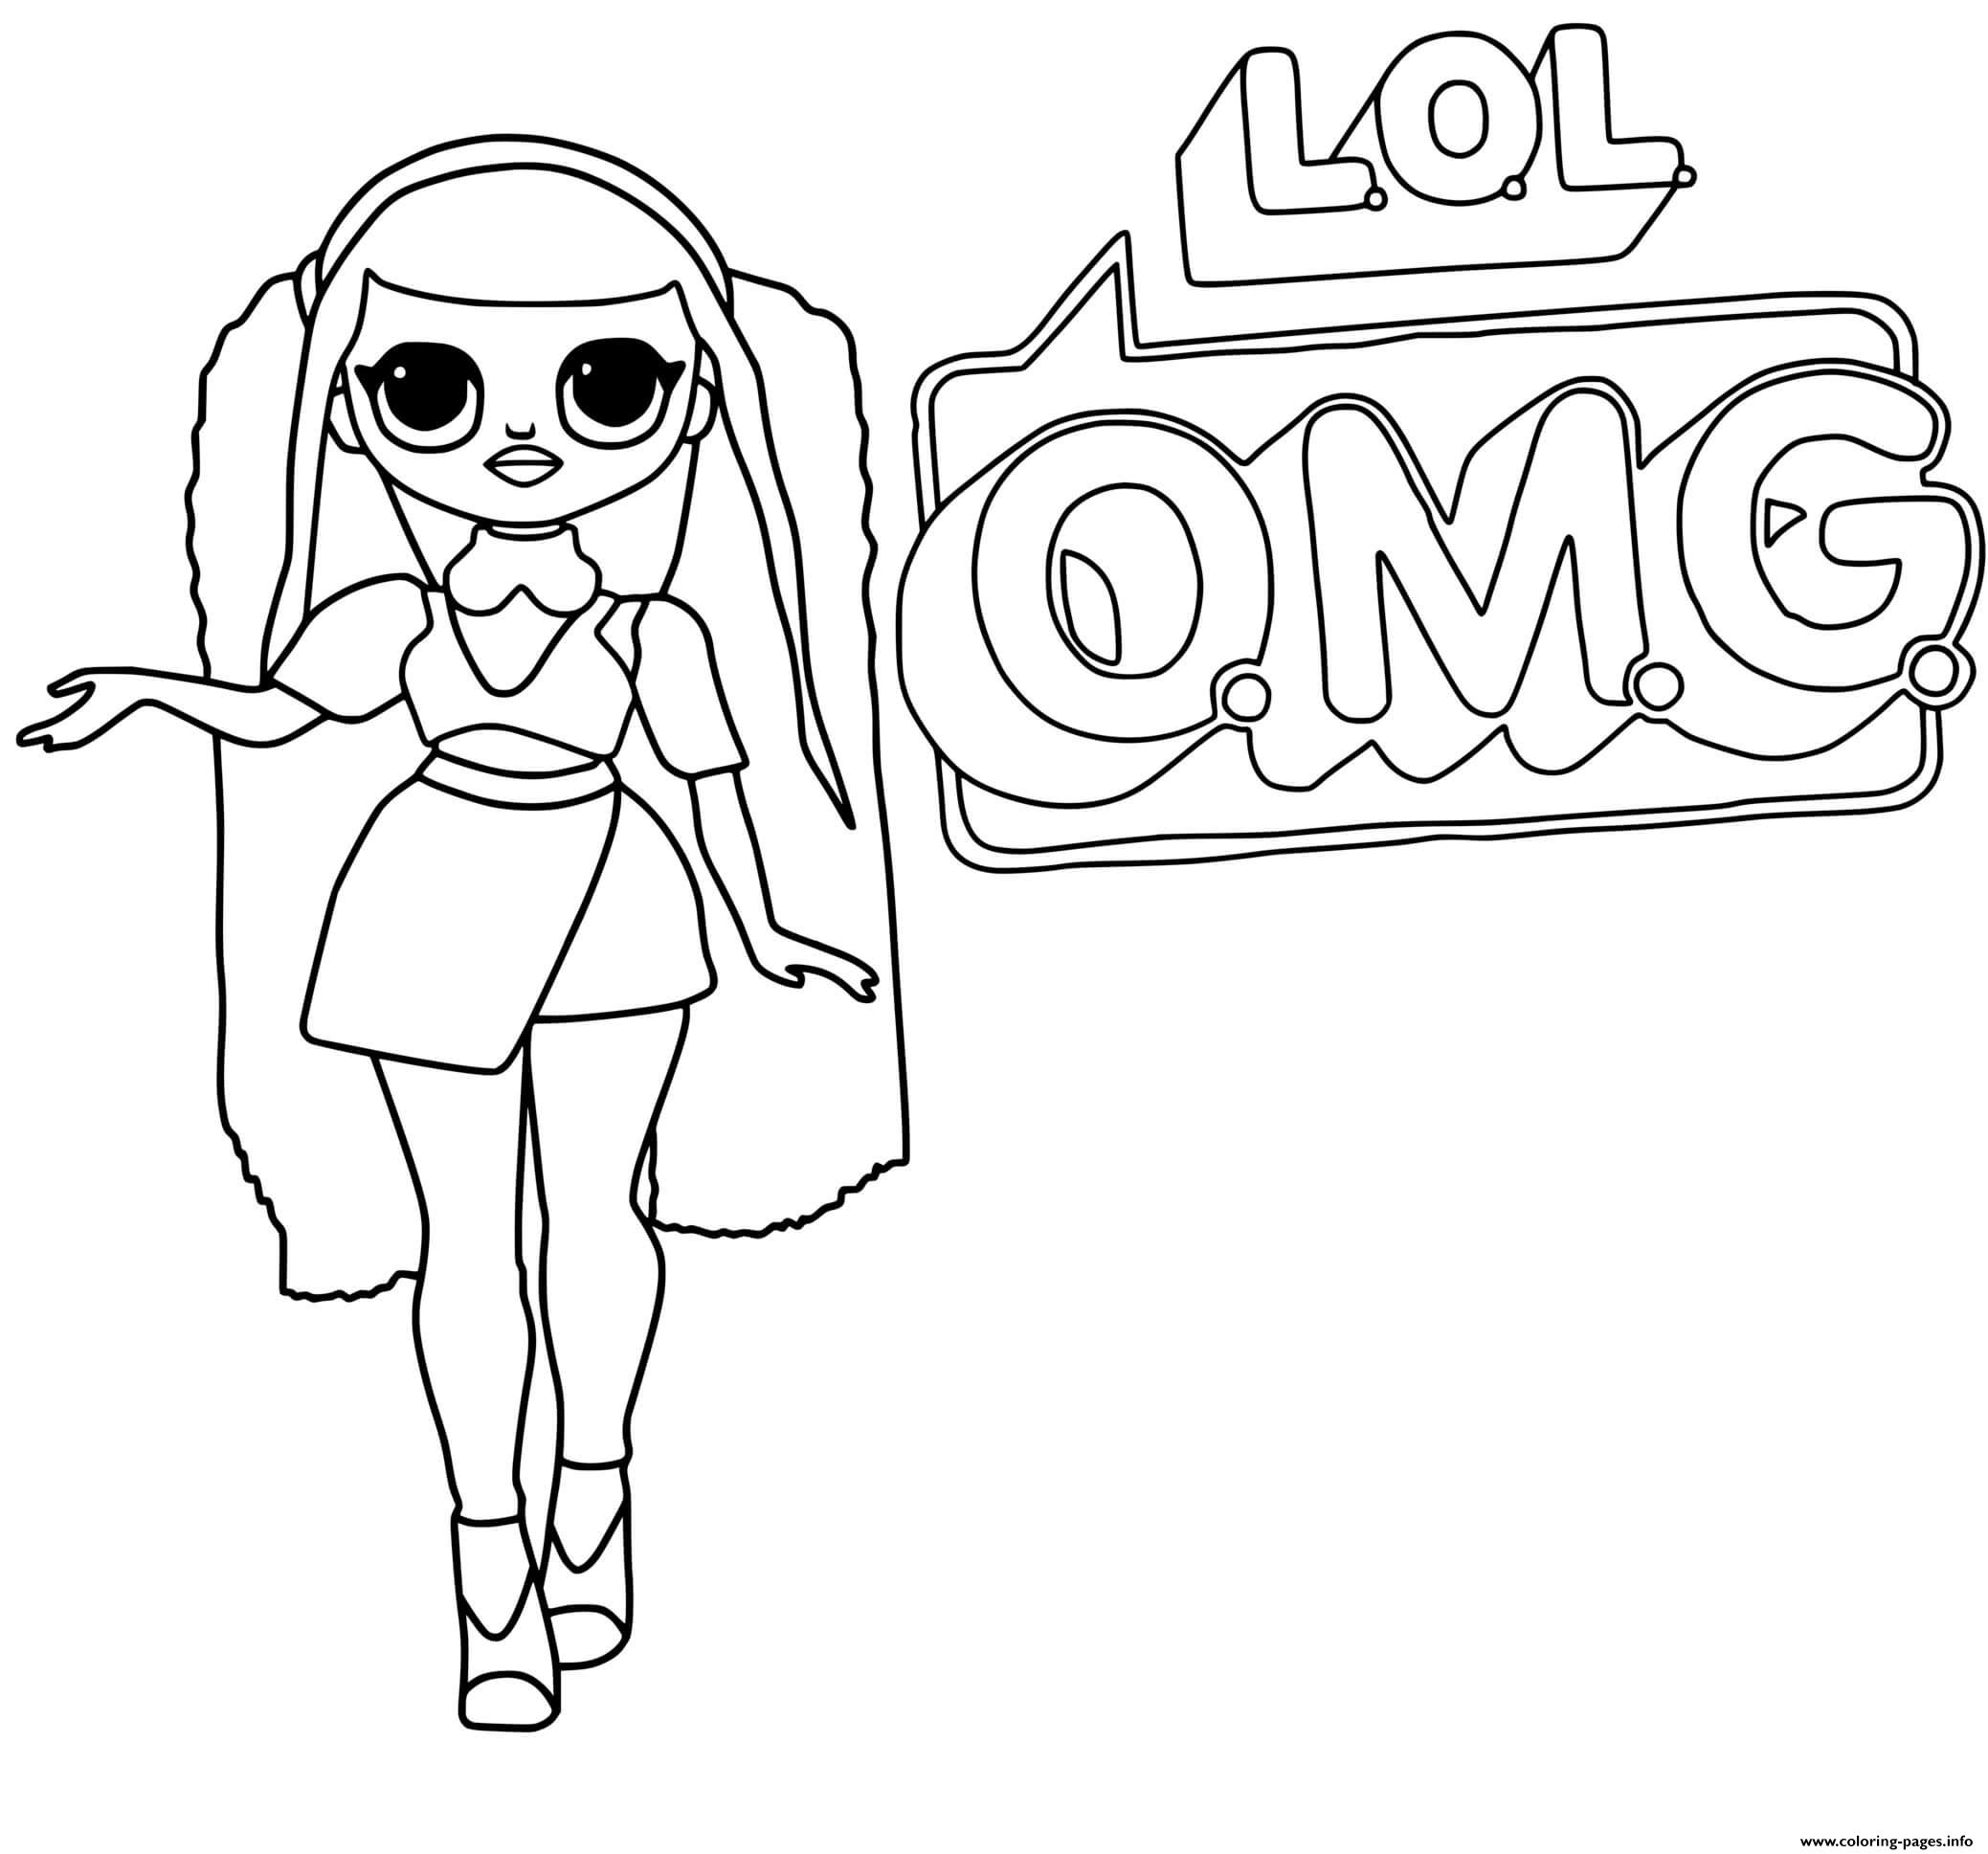 Lol Omg Logo Canylicious Girl coloring